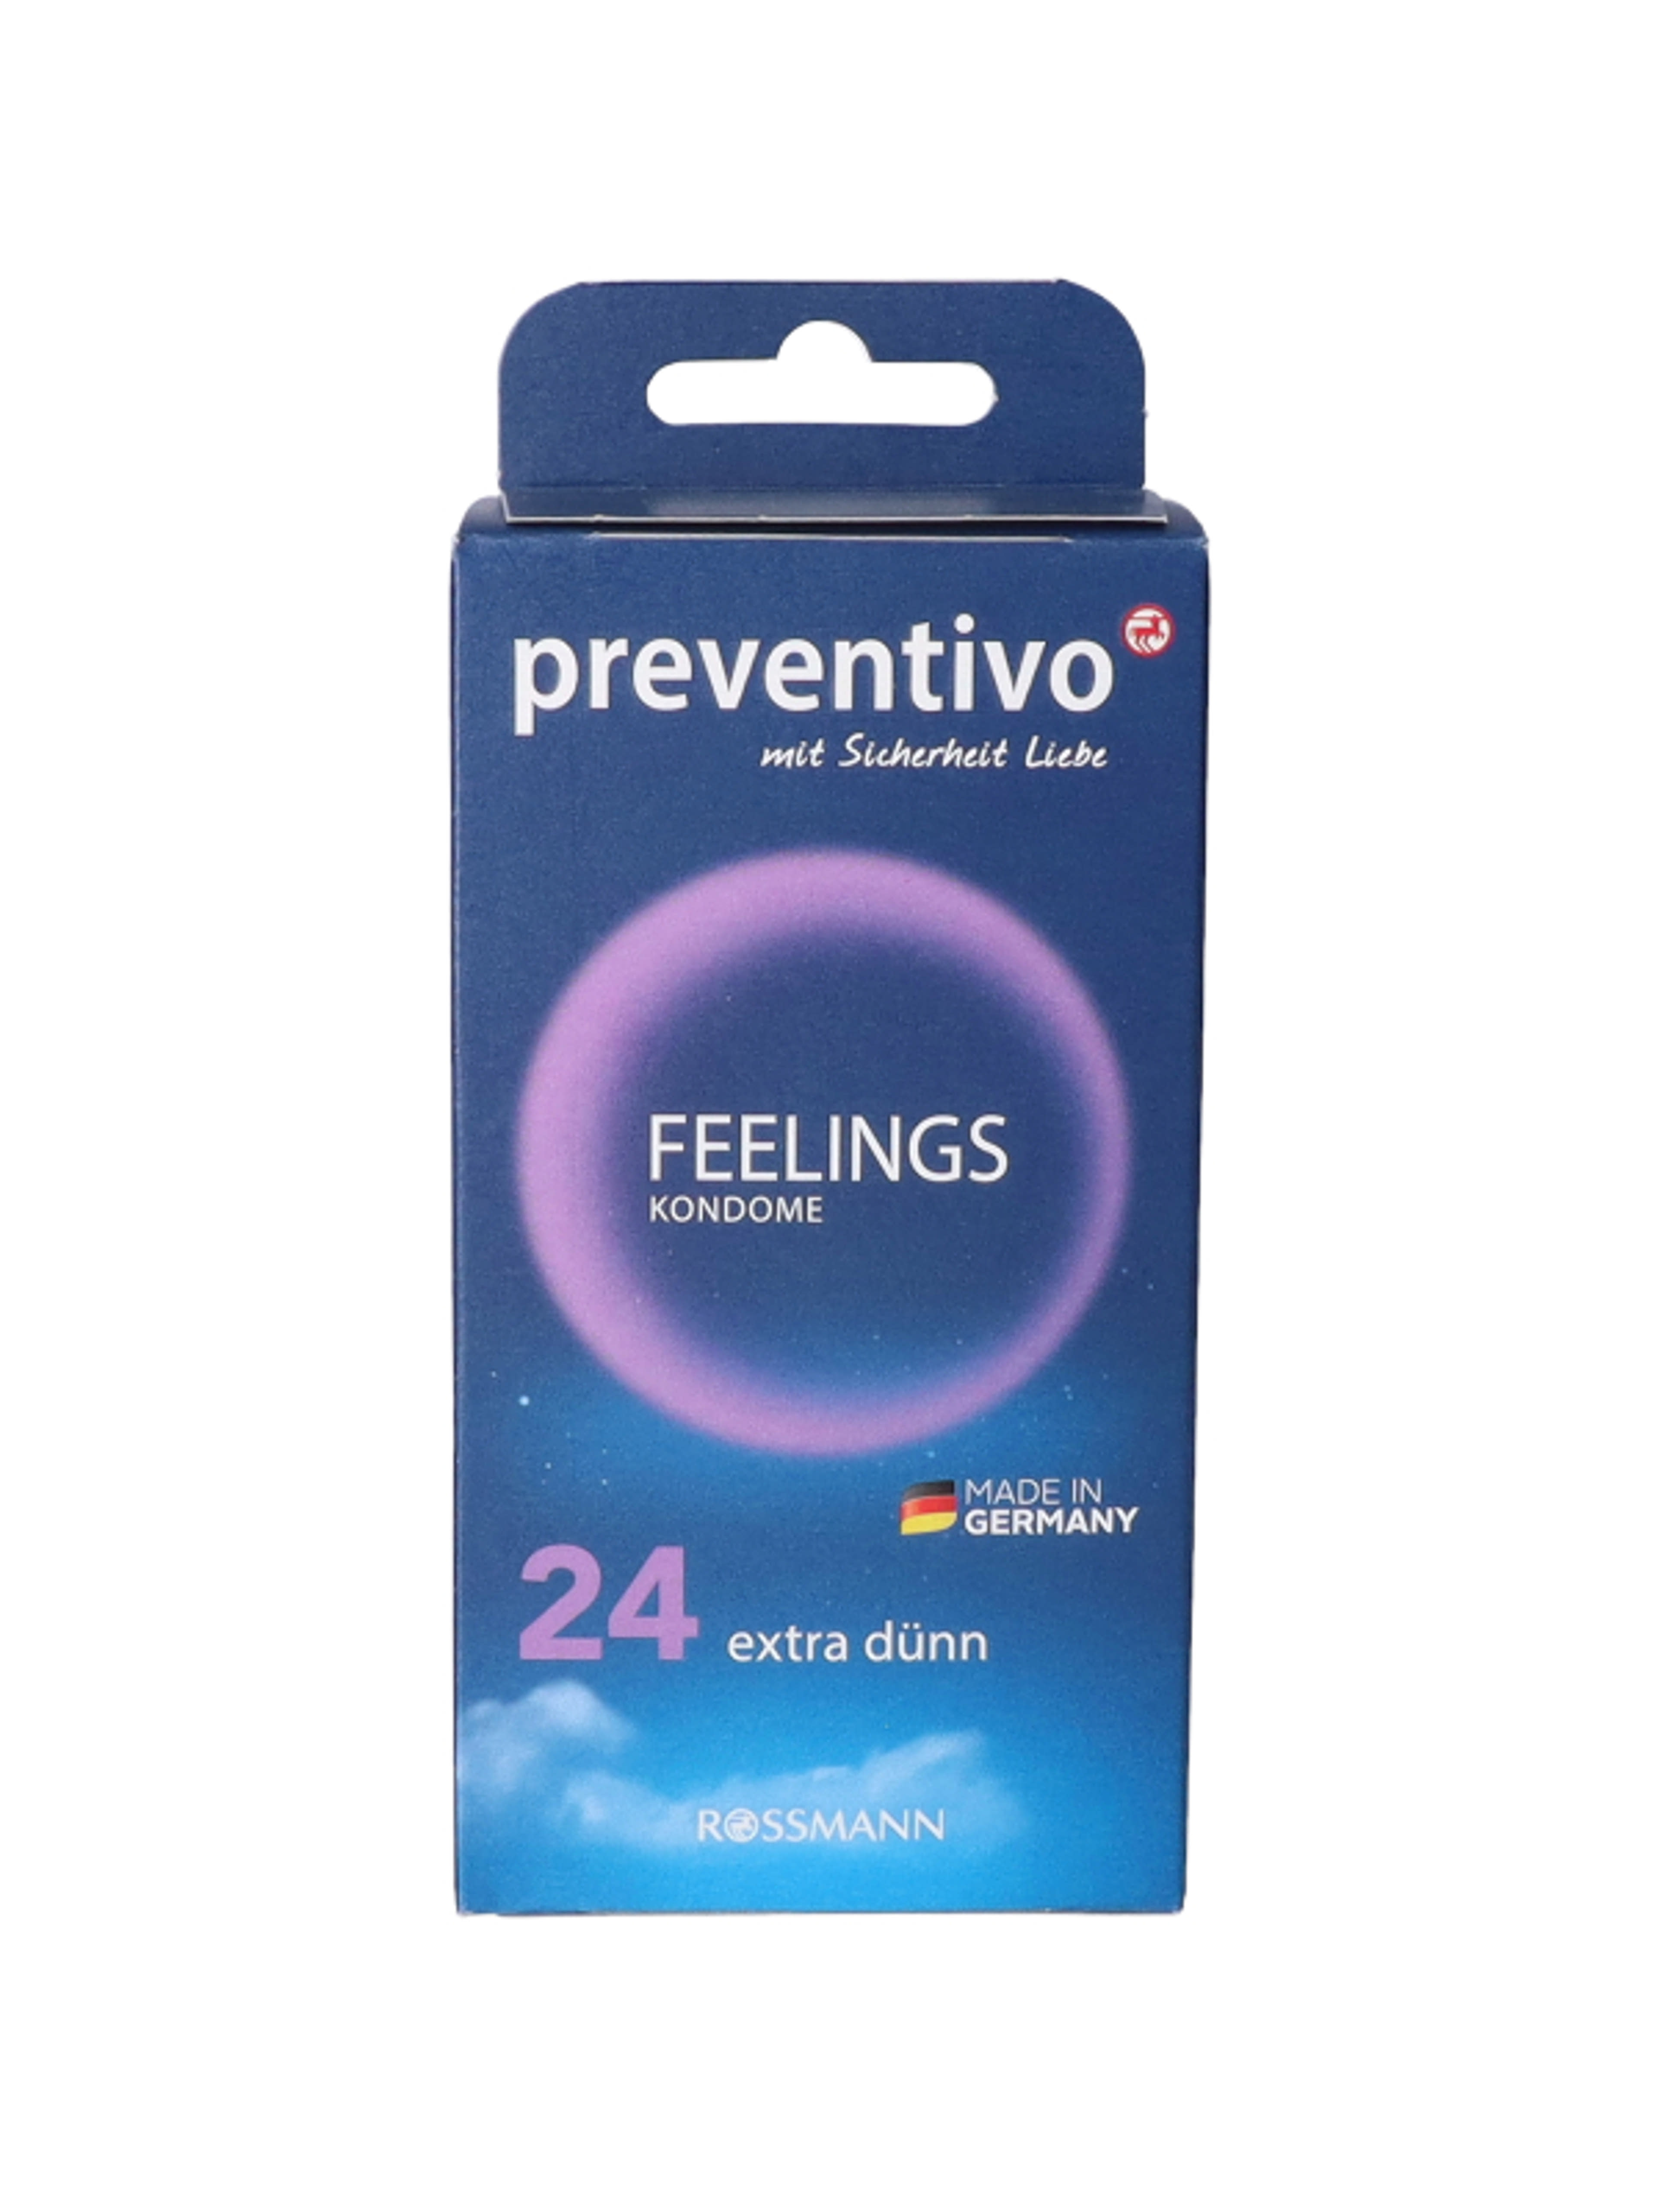 Preventivo ovszer feelings - 24 db-1